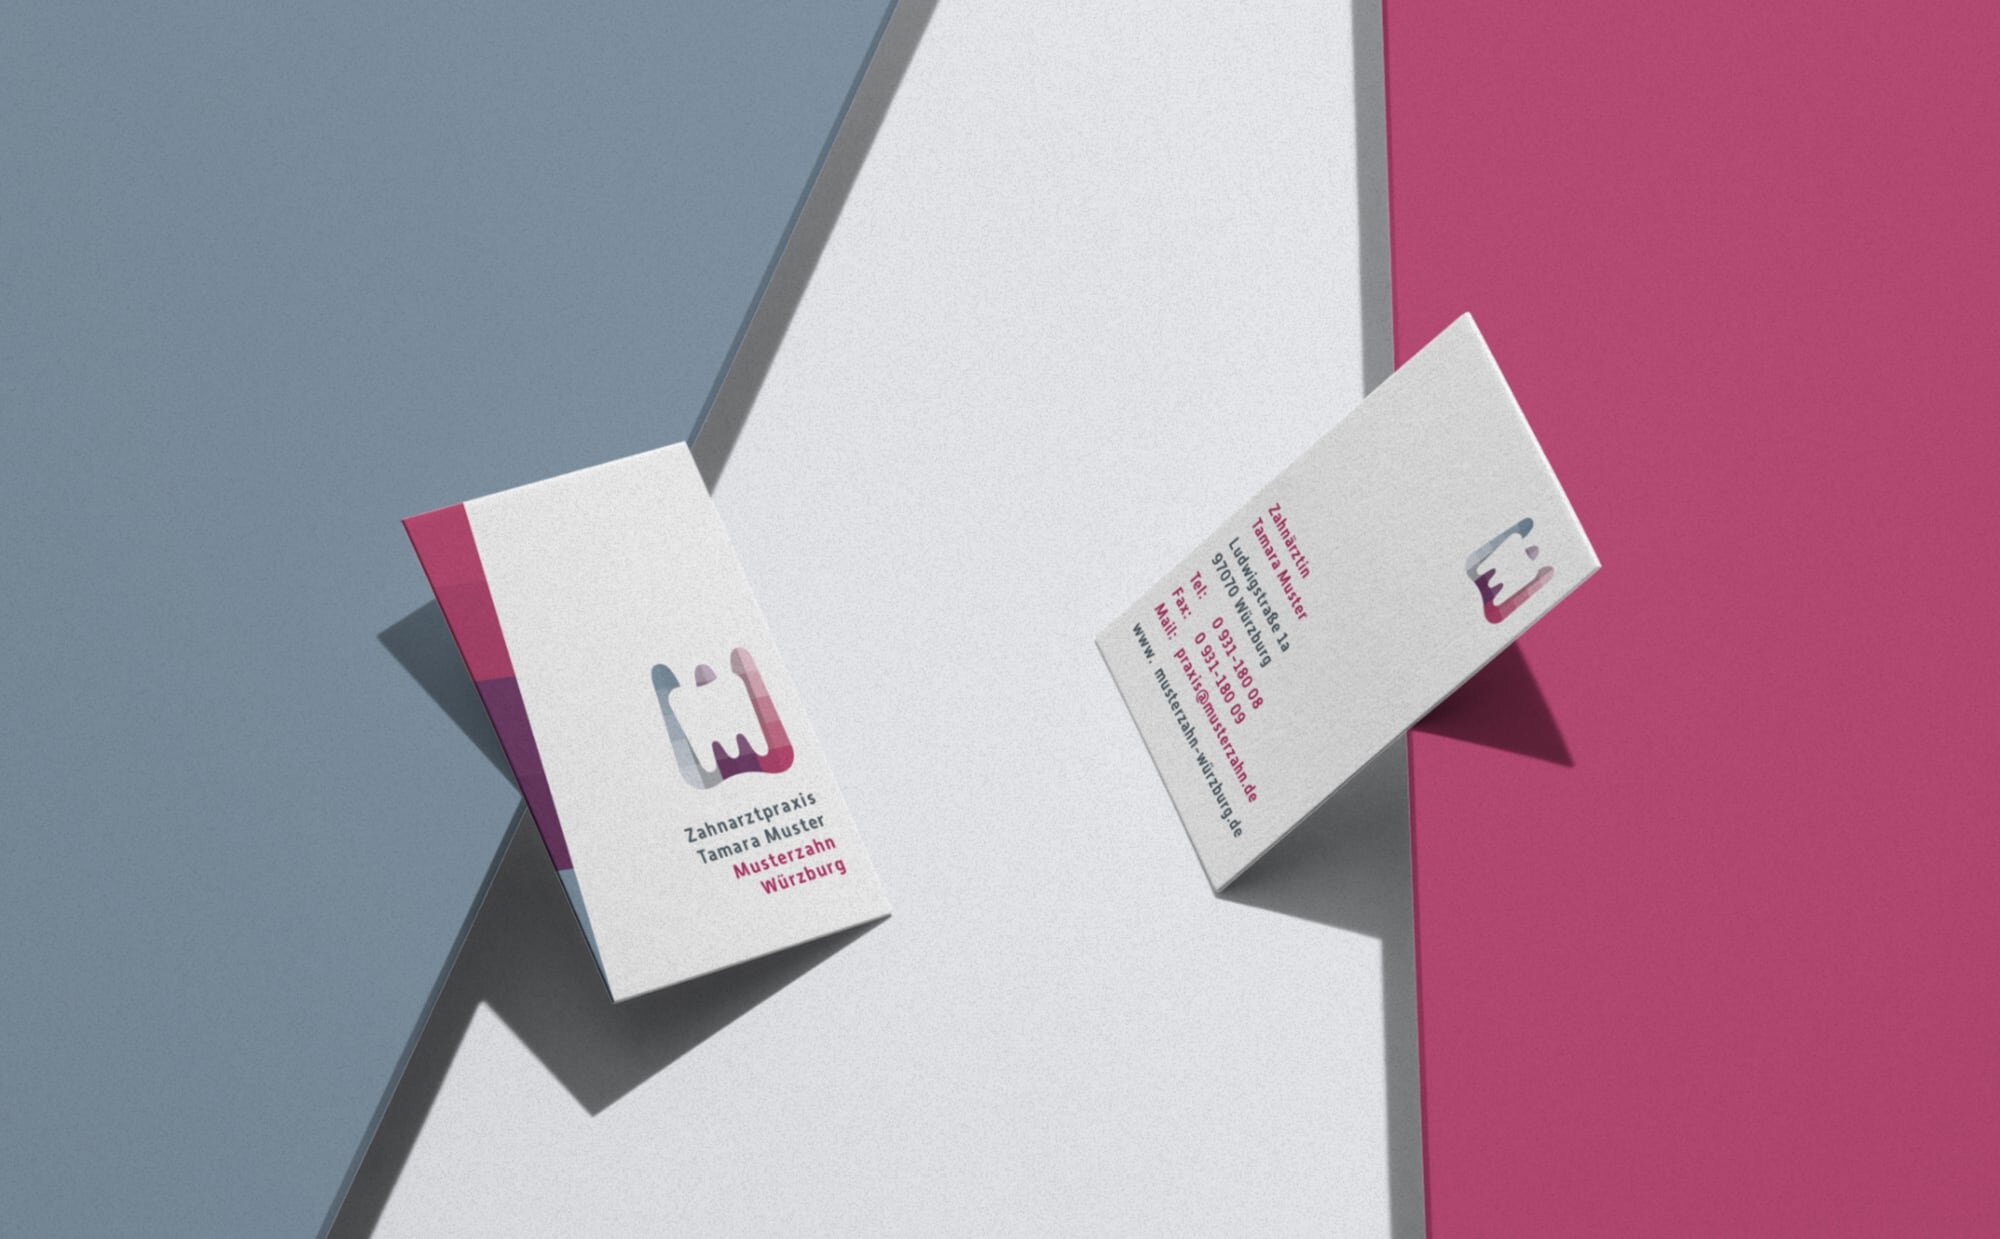 Studio_Michael_Seidl_branding-design_Musterzahn-business-card.jpg